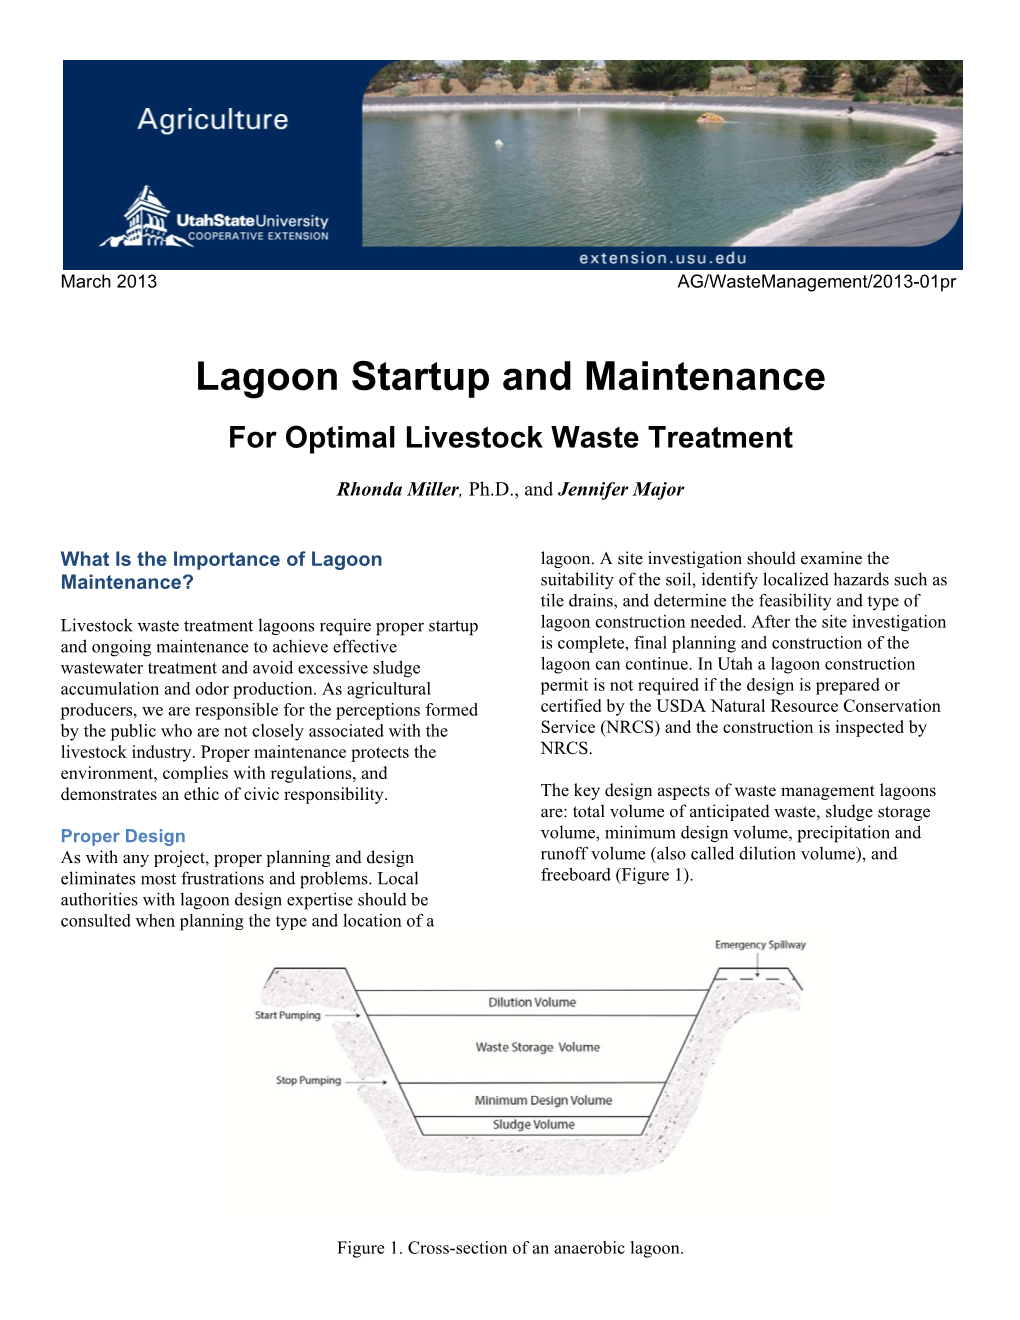 Lagoon Startup and Maintenance